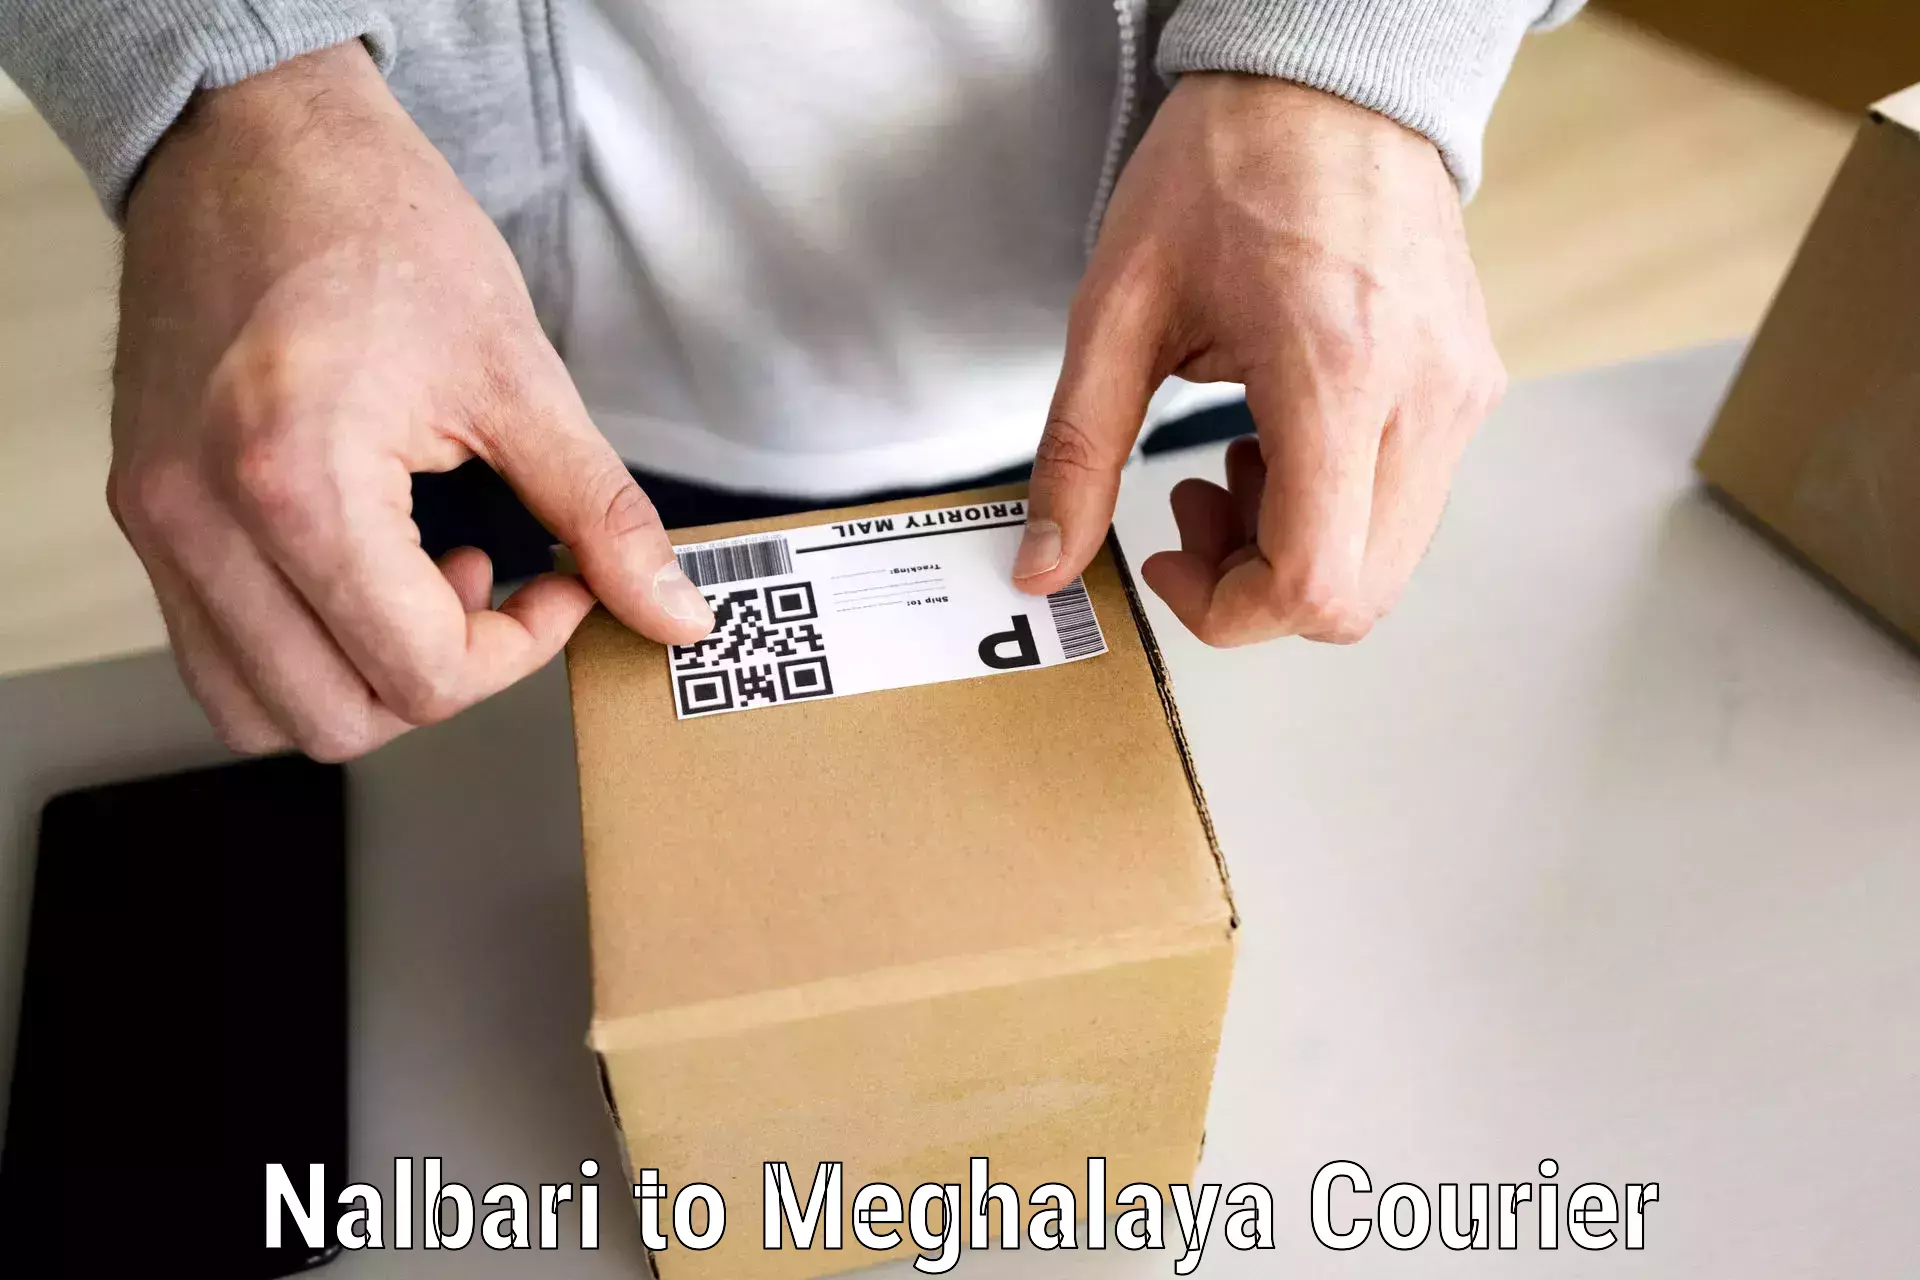 Efficient packing services Nalbari to Shillong